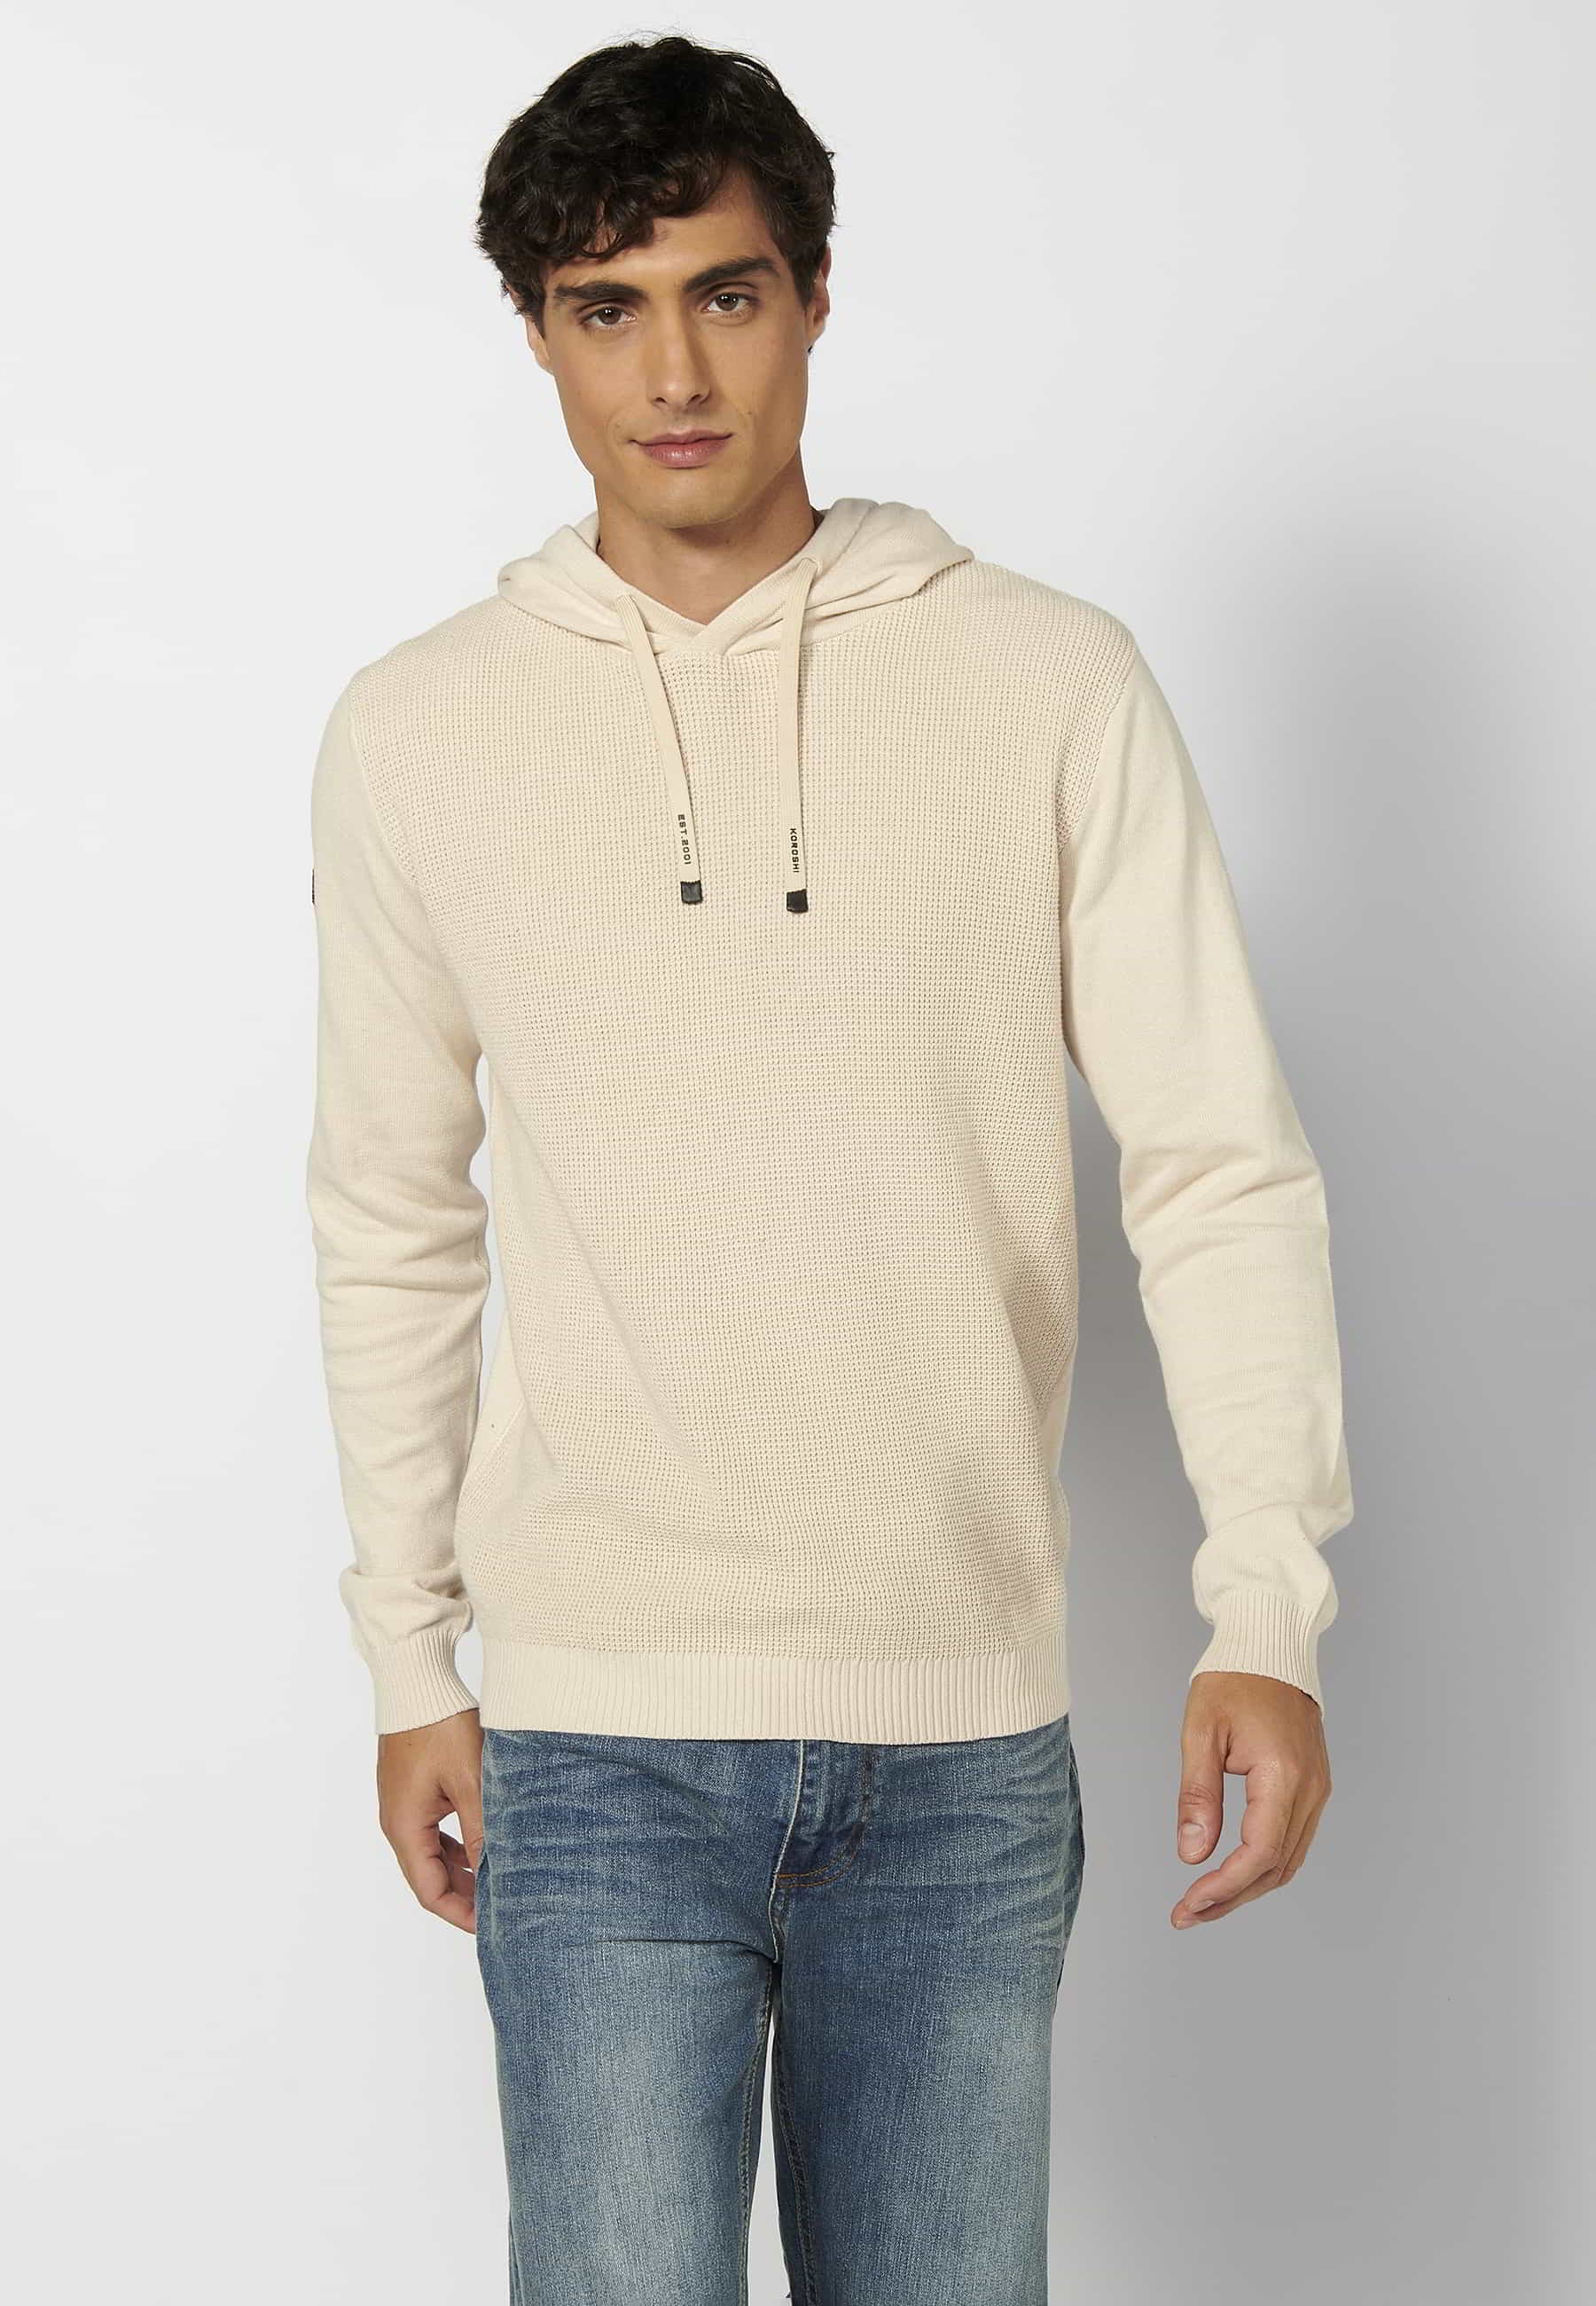 Long-sleeved tricot sweatshirt with adjustable ecru hood for Men